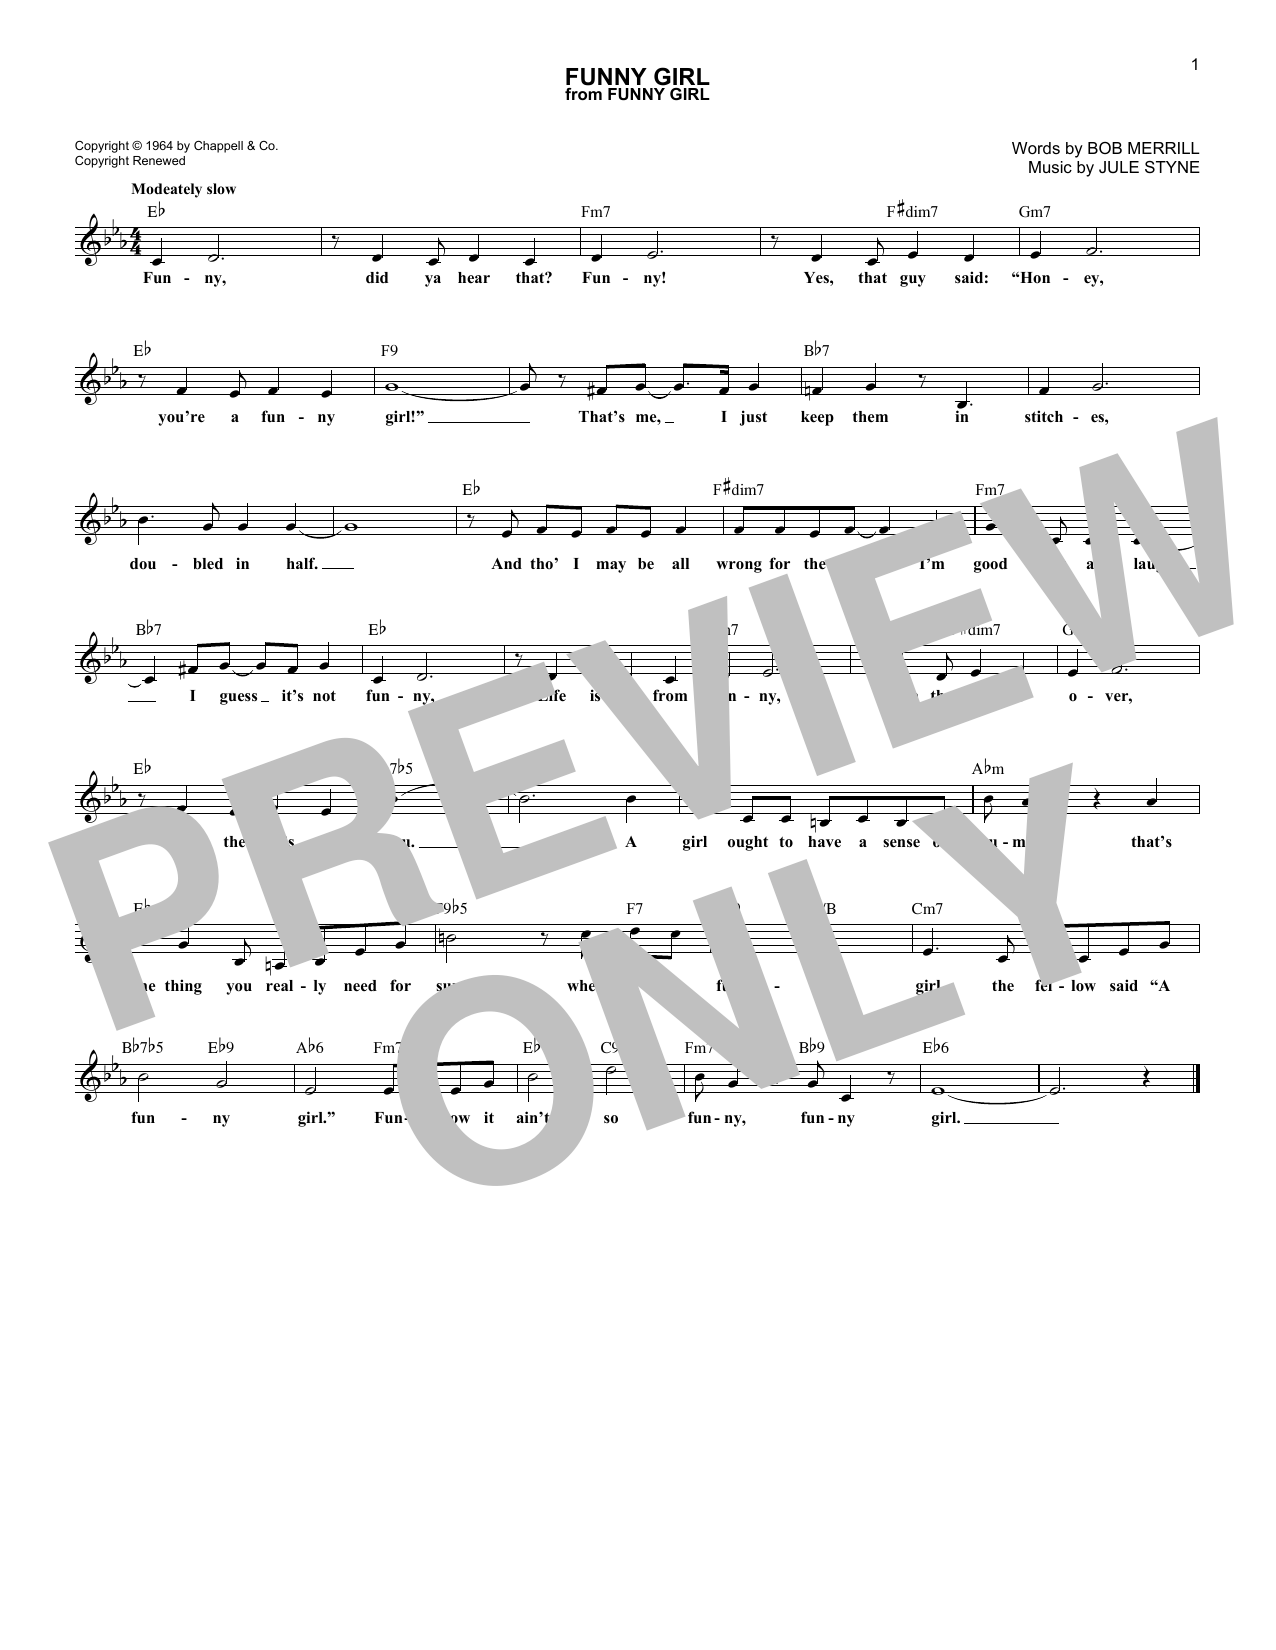 Bob Merrill Funny Girl Sheet Music Notes & Chords for Melody Line, Lyrics & Chords - Download or Print PDF